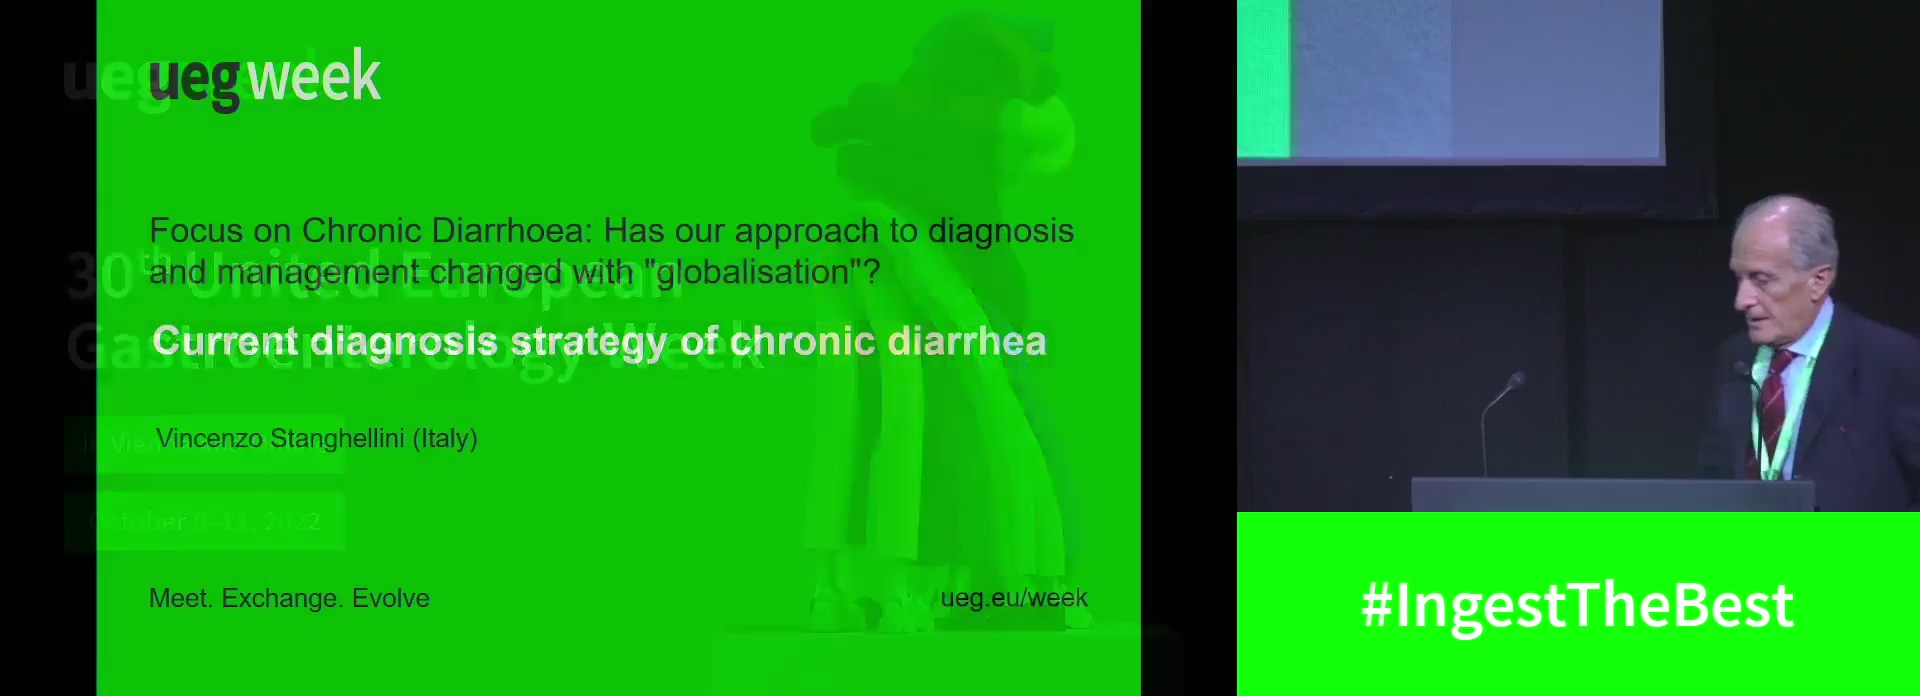 Current diagnosis strategy of chronic diarrhea